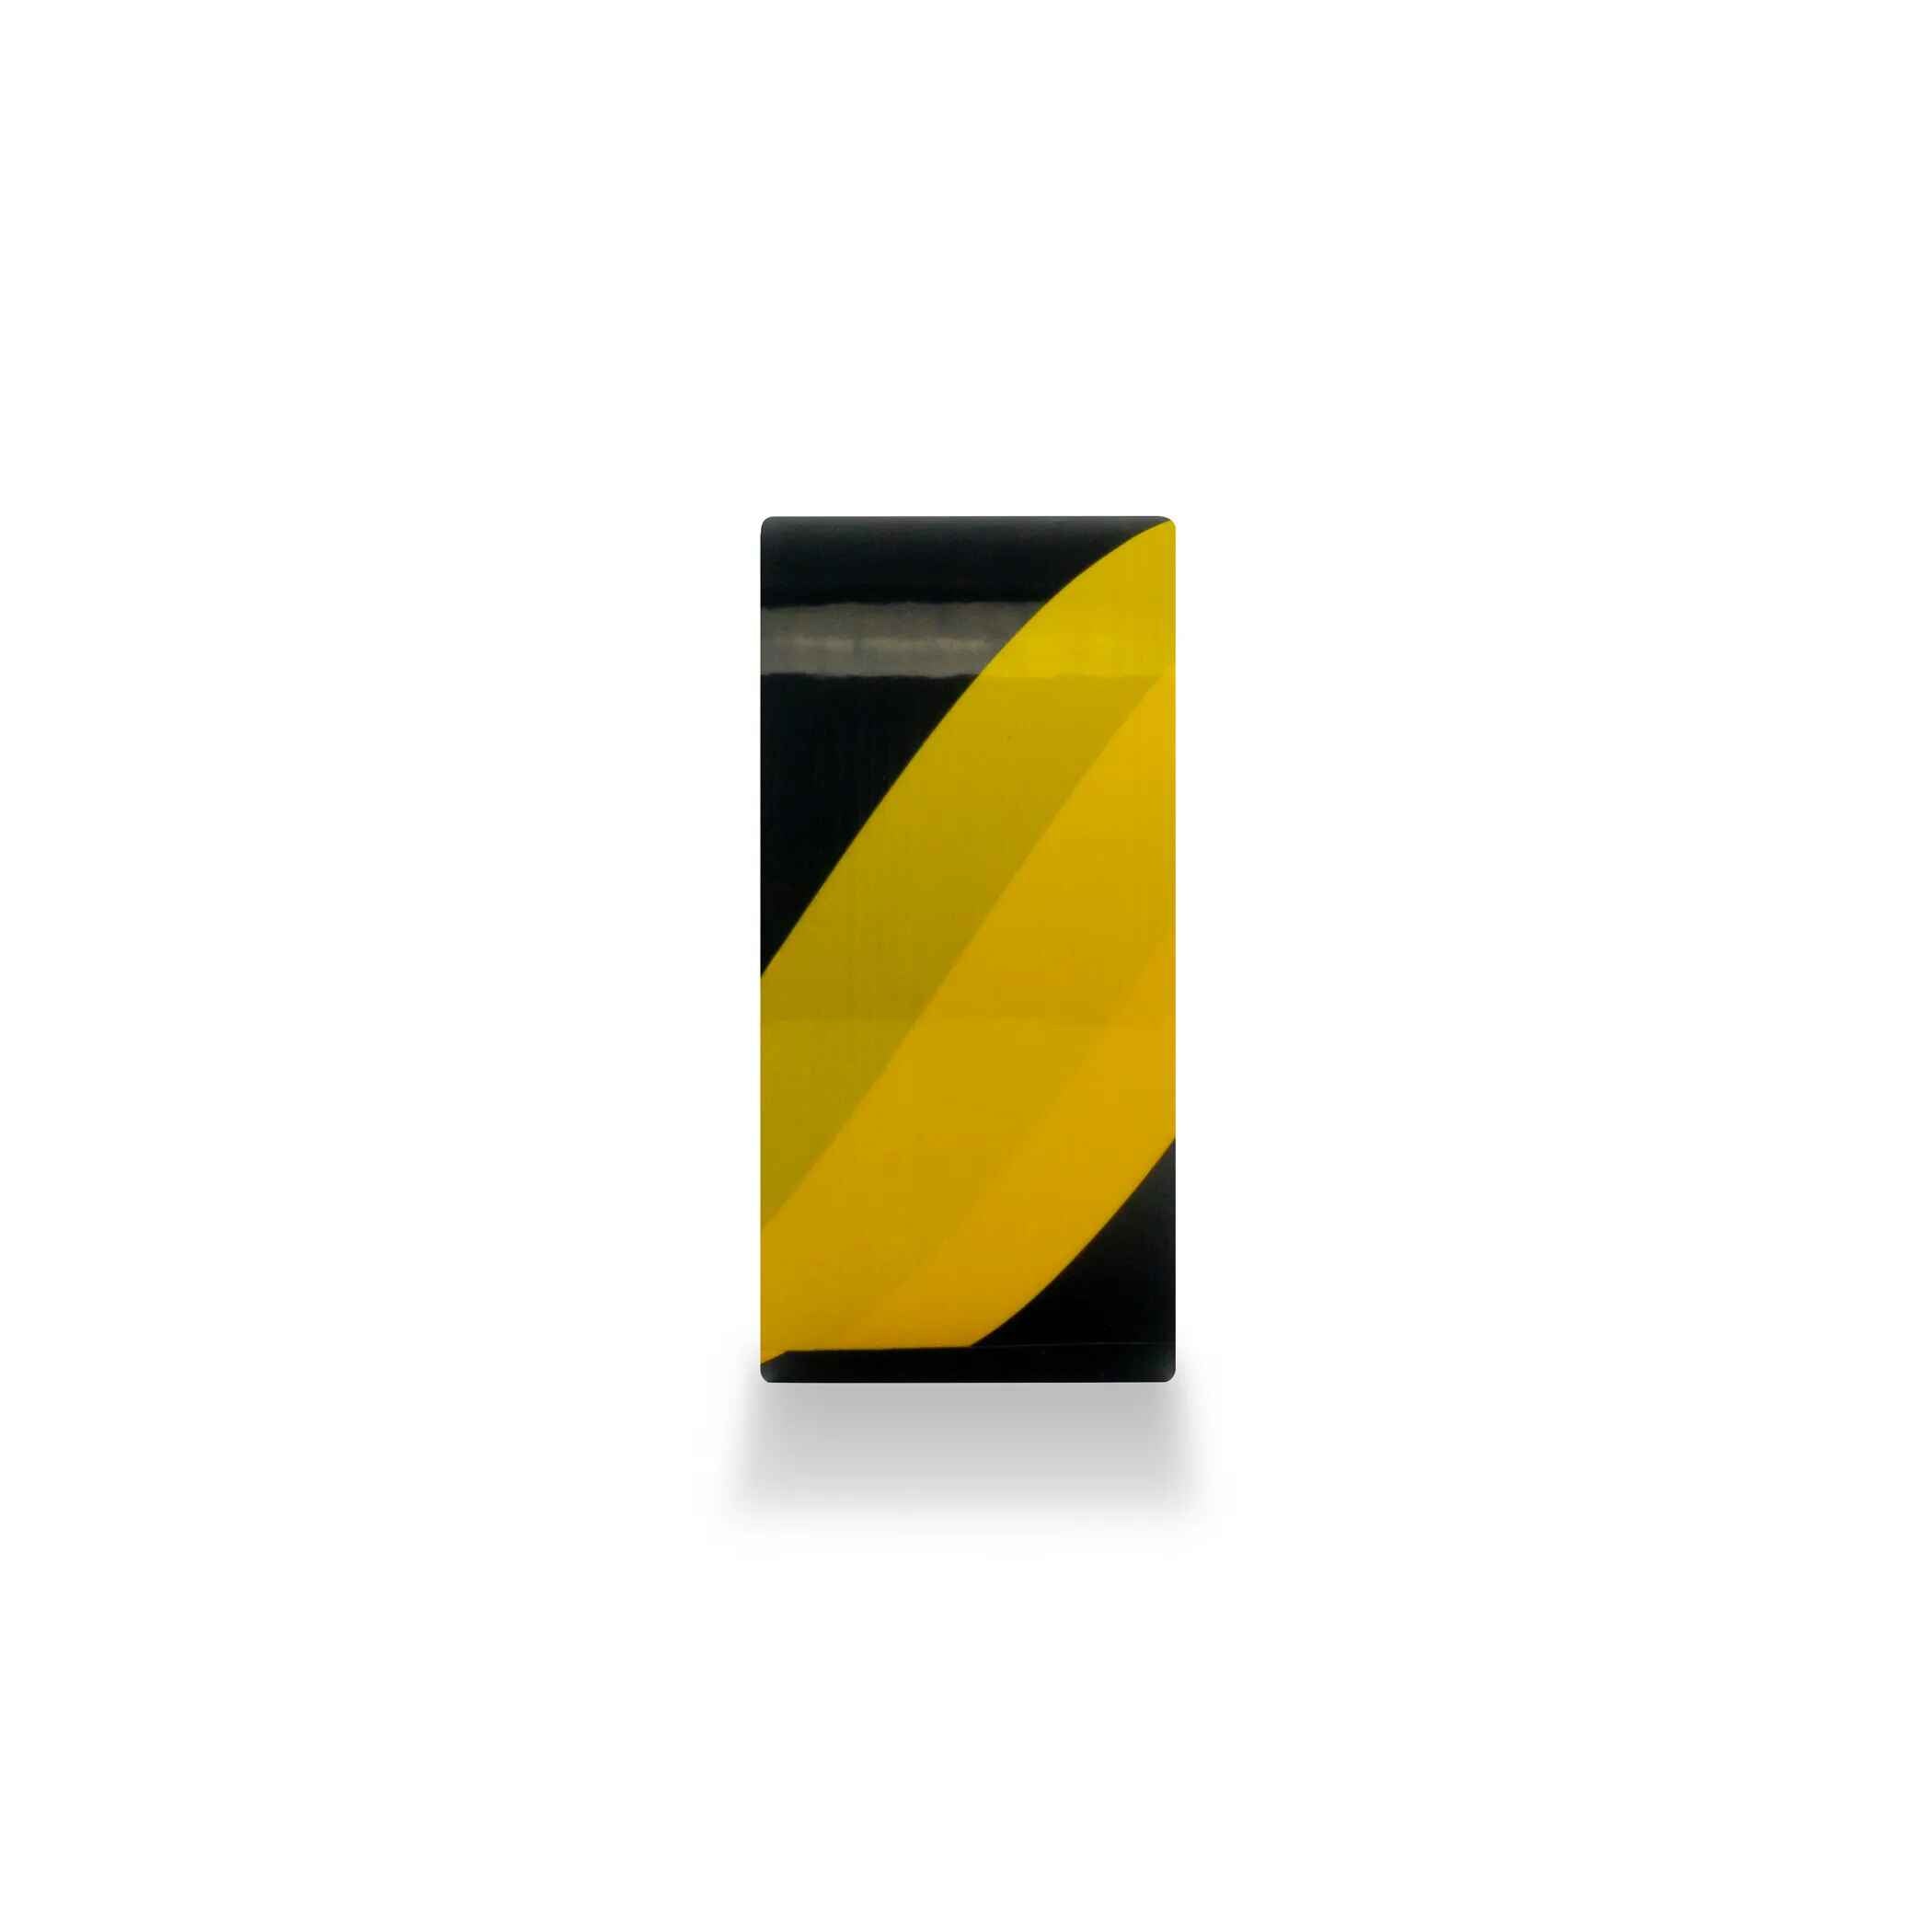 SLIPGUARD™ Anti-Slip Floor Tape. 60 Grit. Yellow & Black